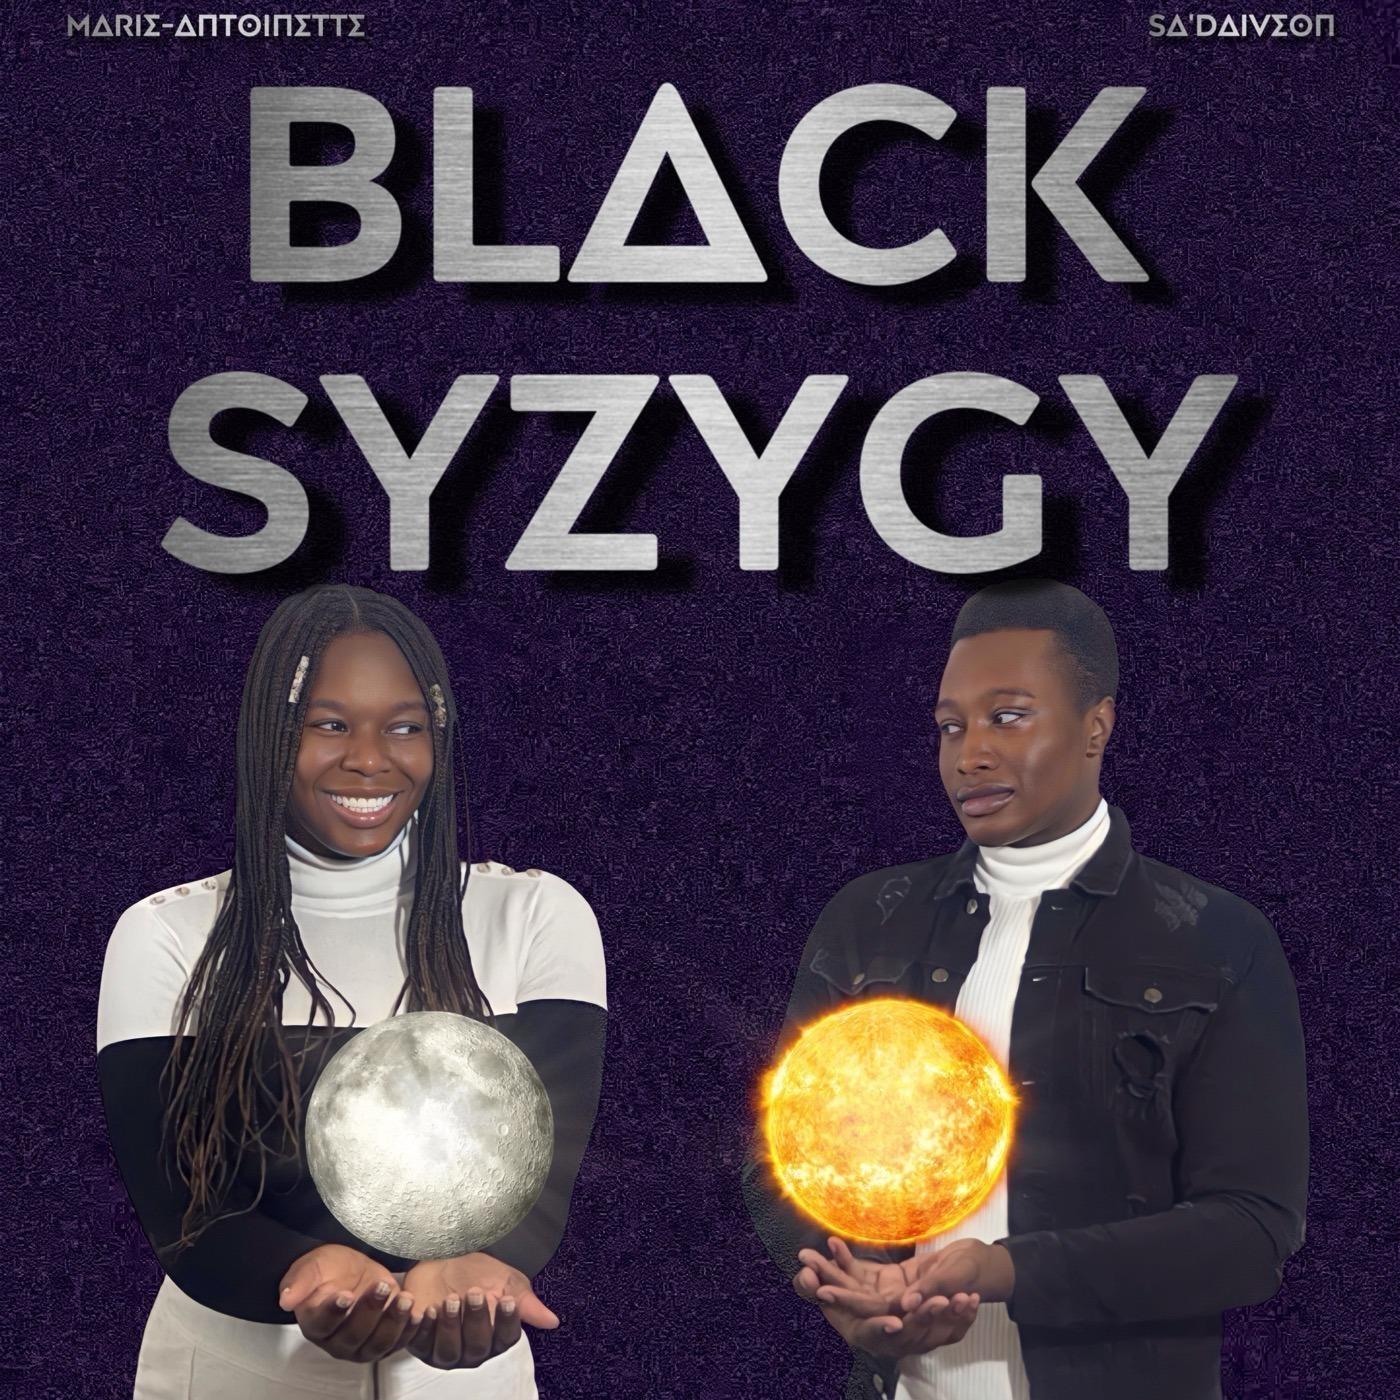 Black Syzygy